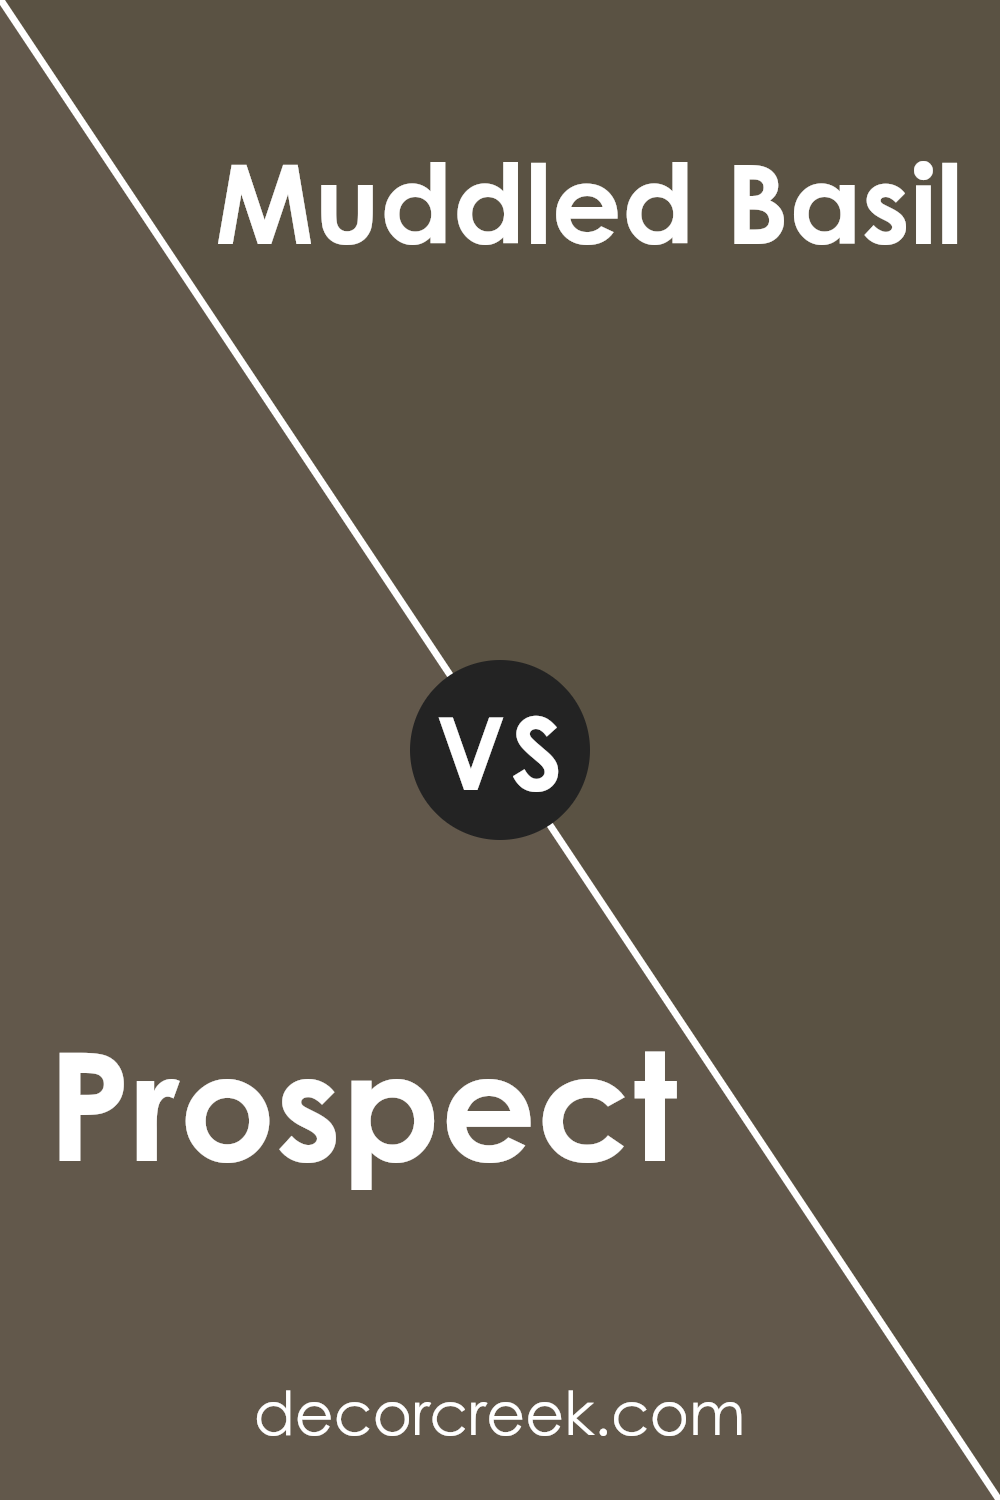 prospect_sw_9615_vs_muddled_basil_sw_7745